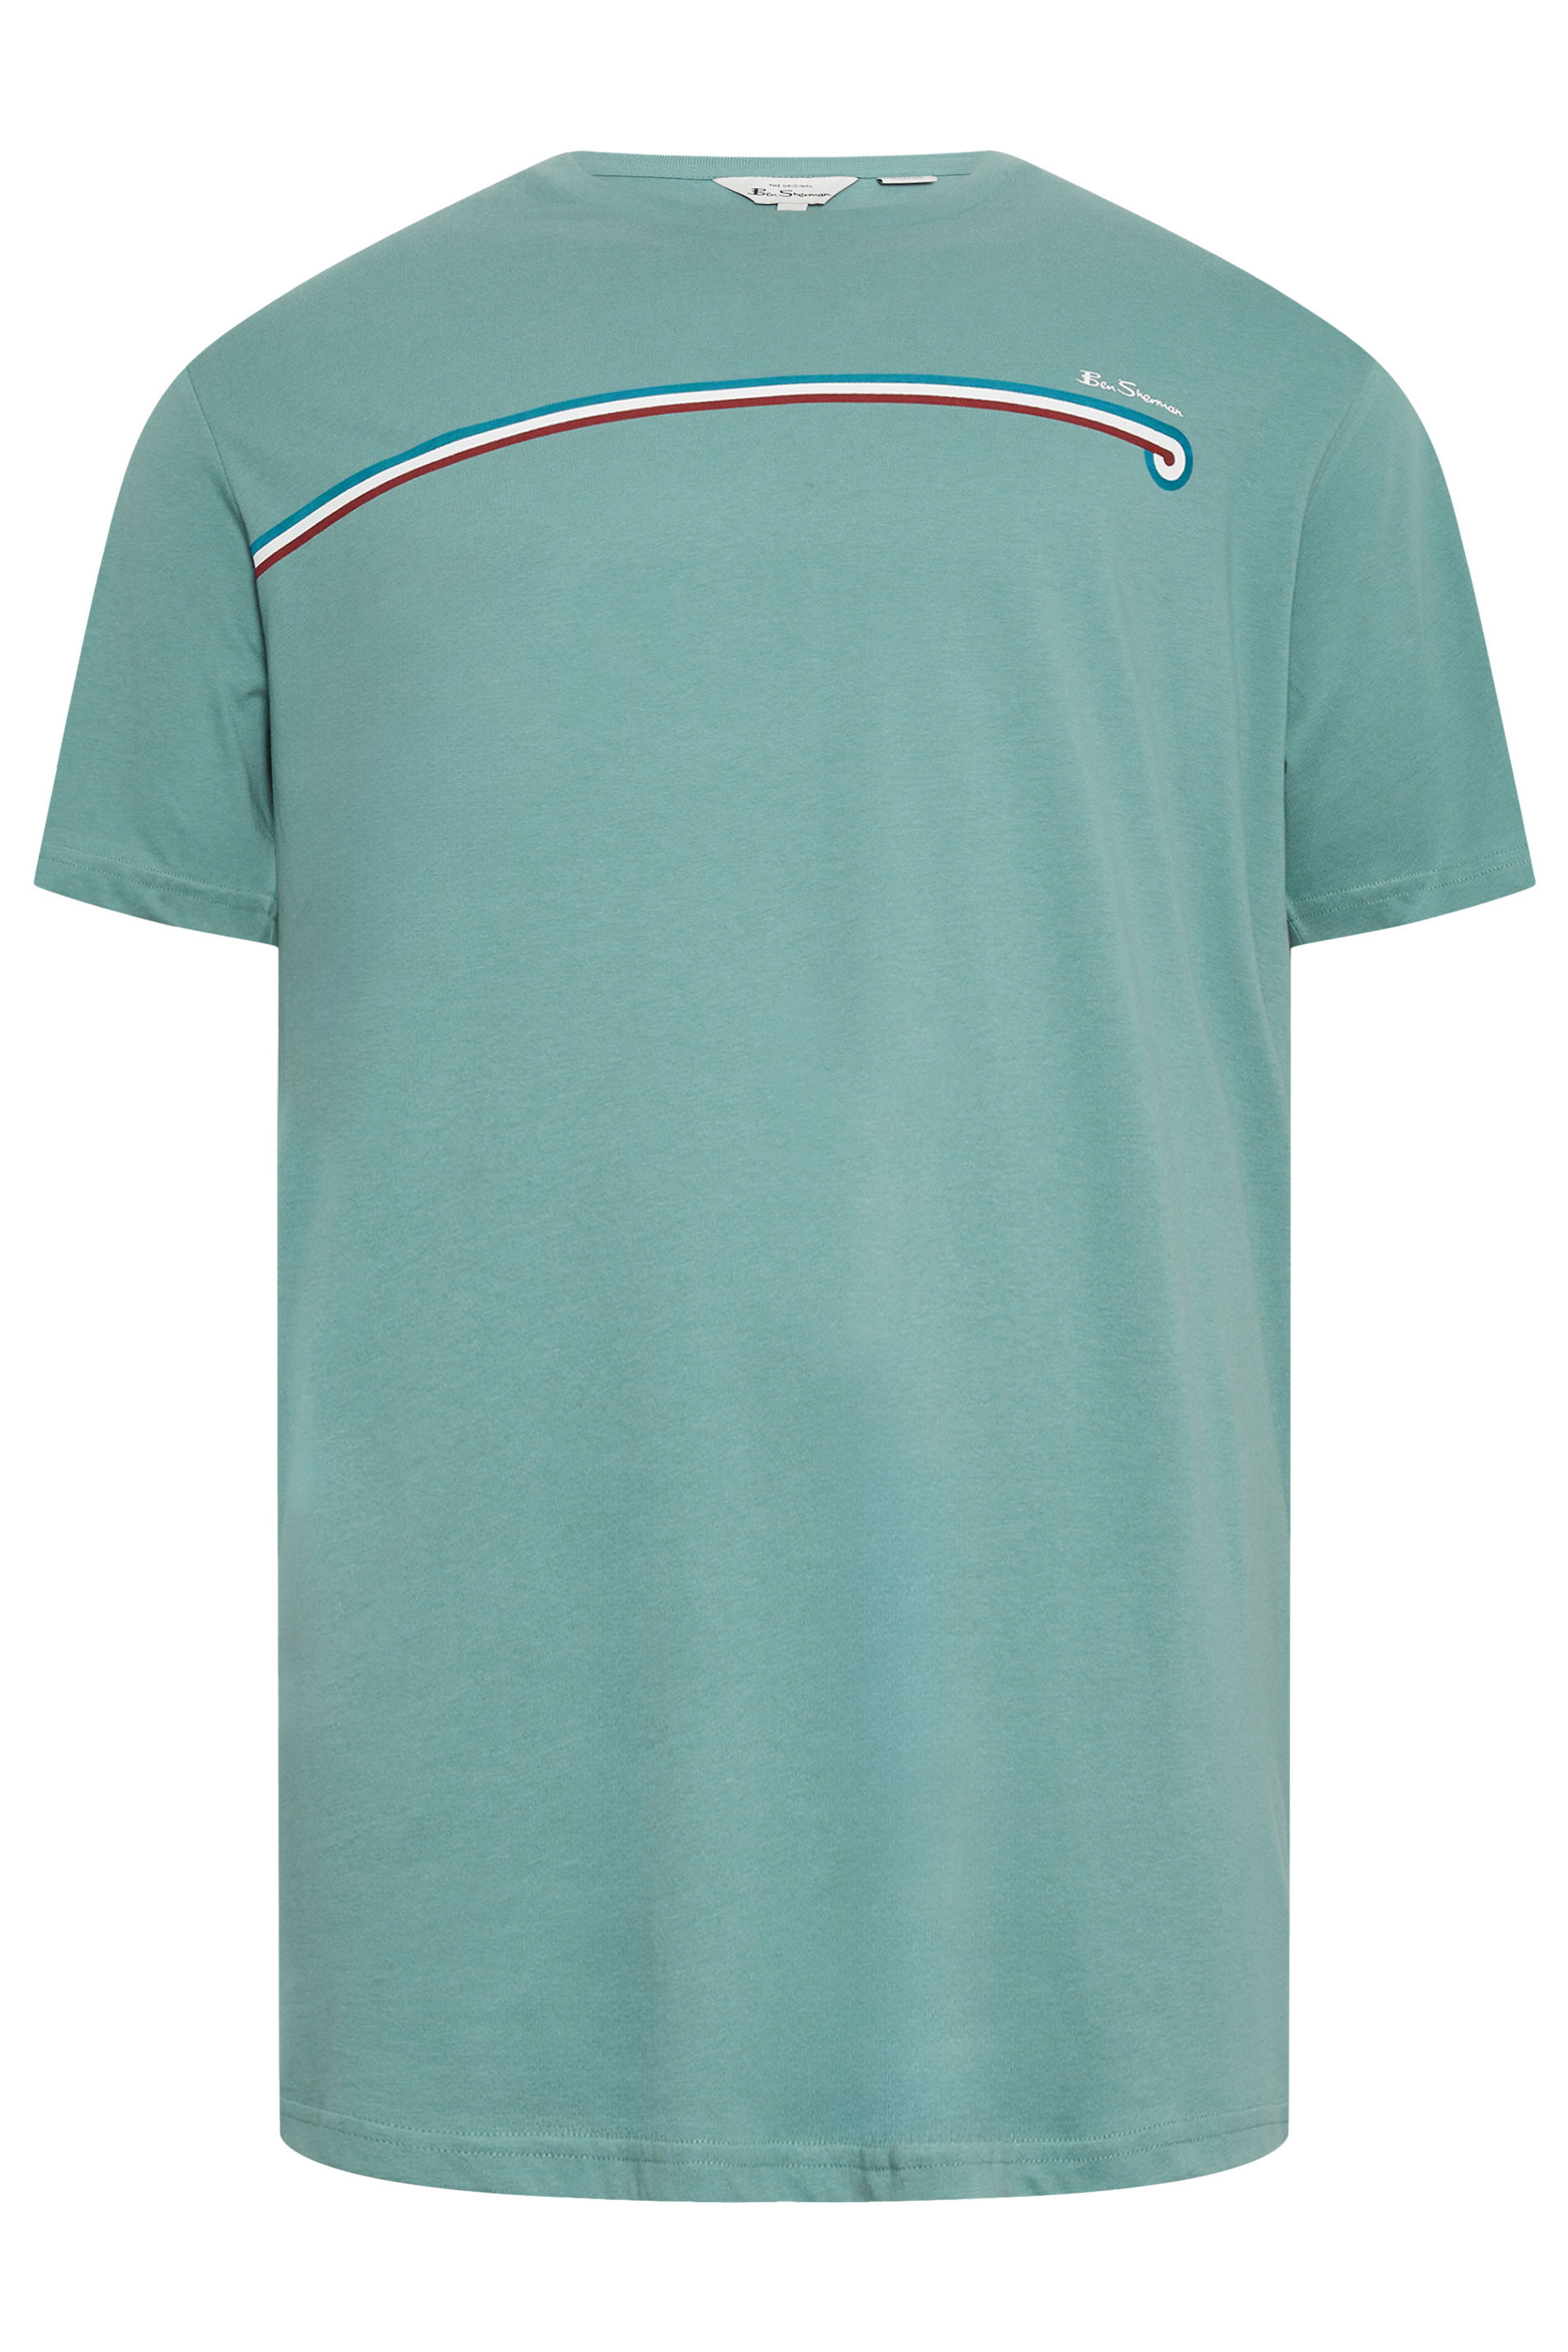 BEN SHERMAN Big & Tall Teal Blue Core Stripe T-Shirt | BadRhino 2